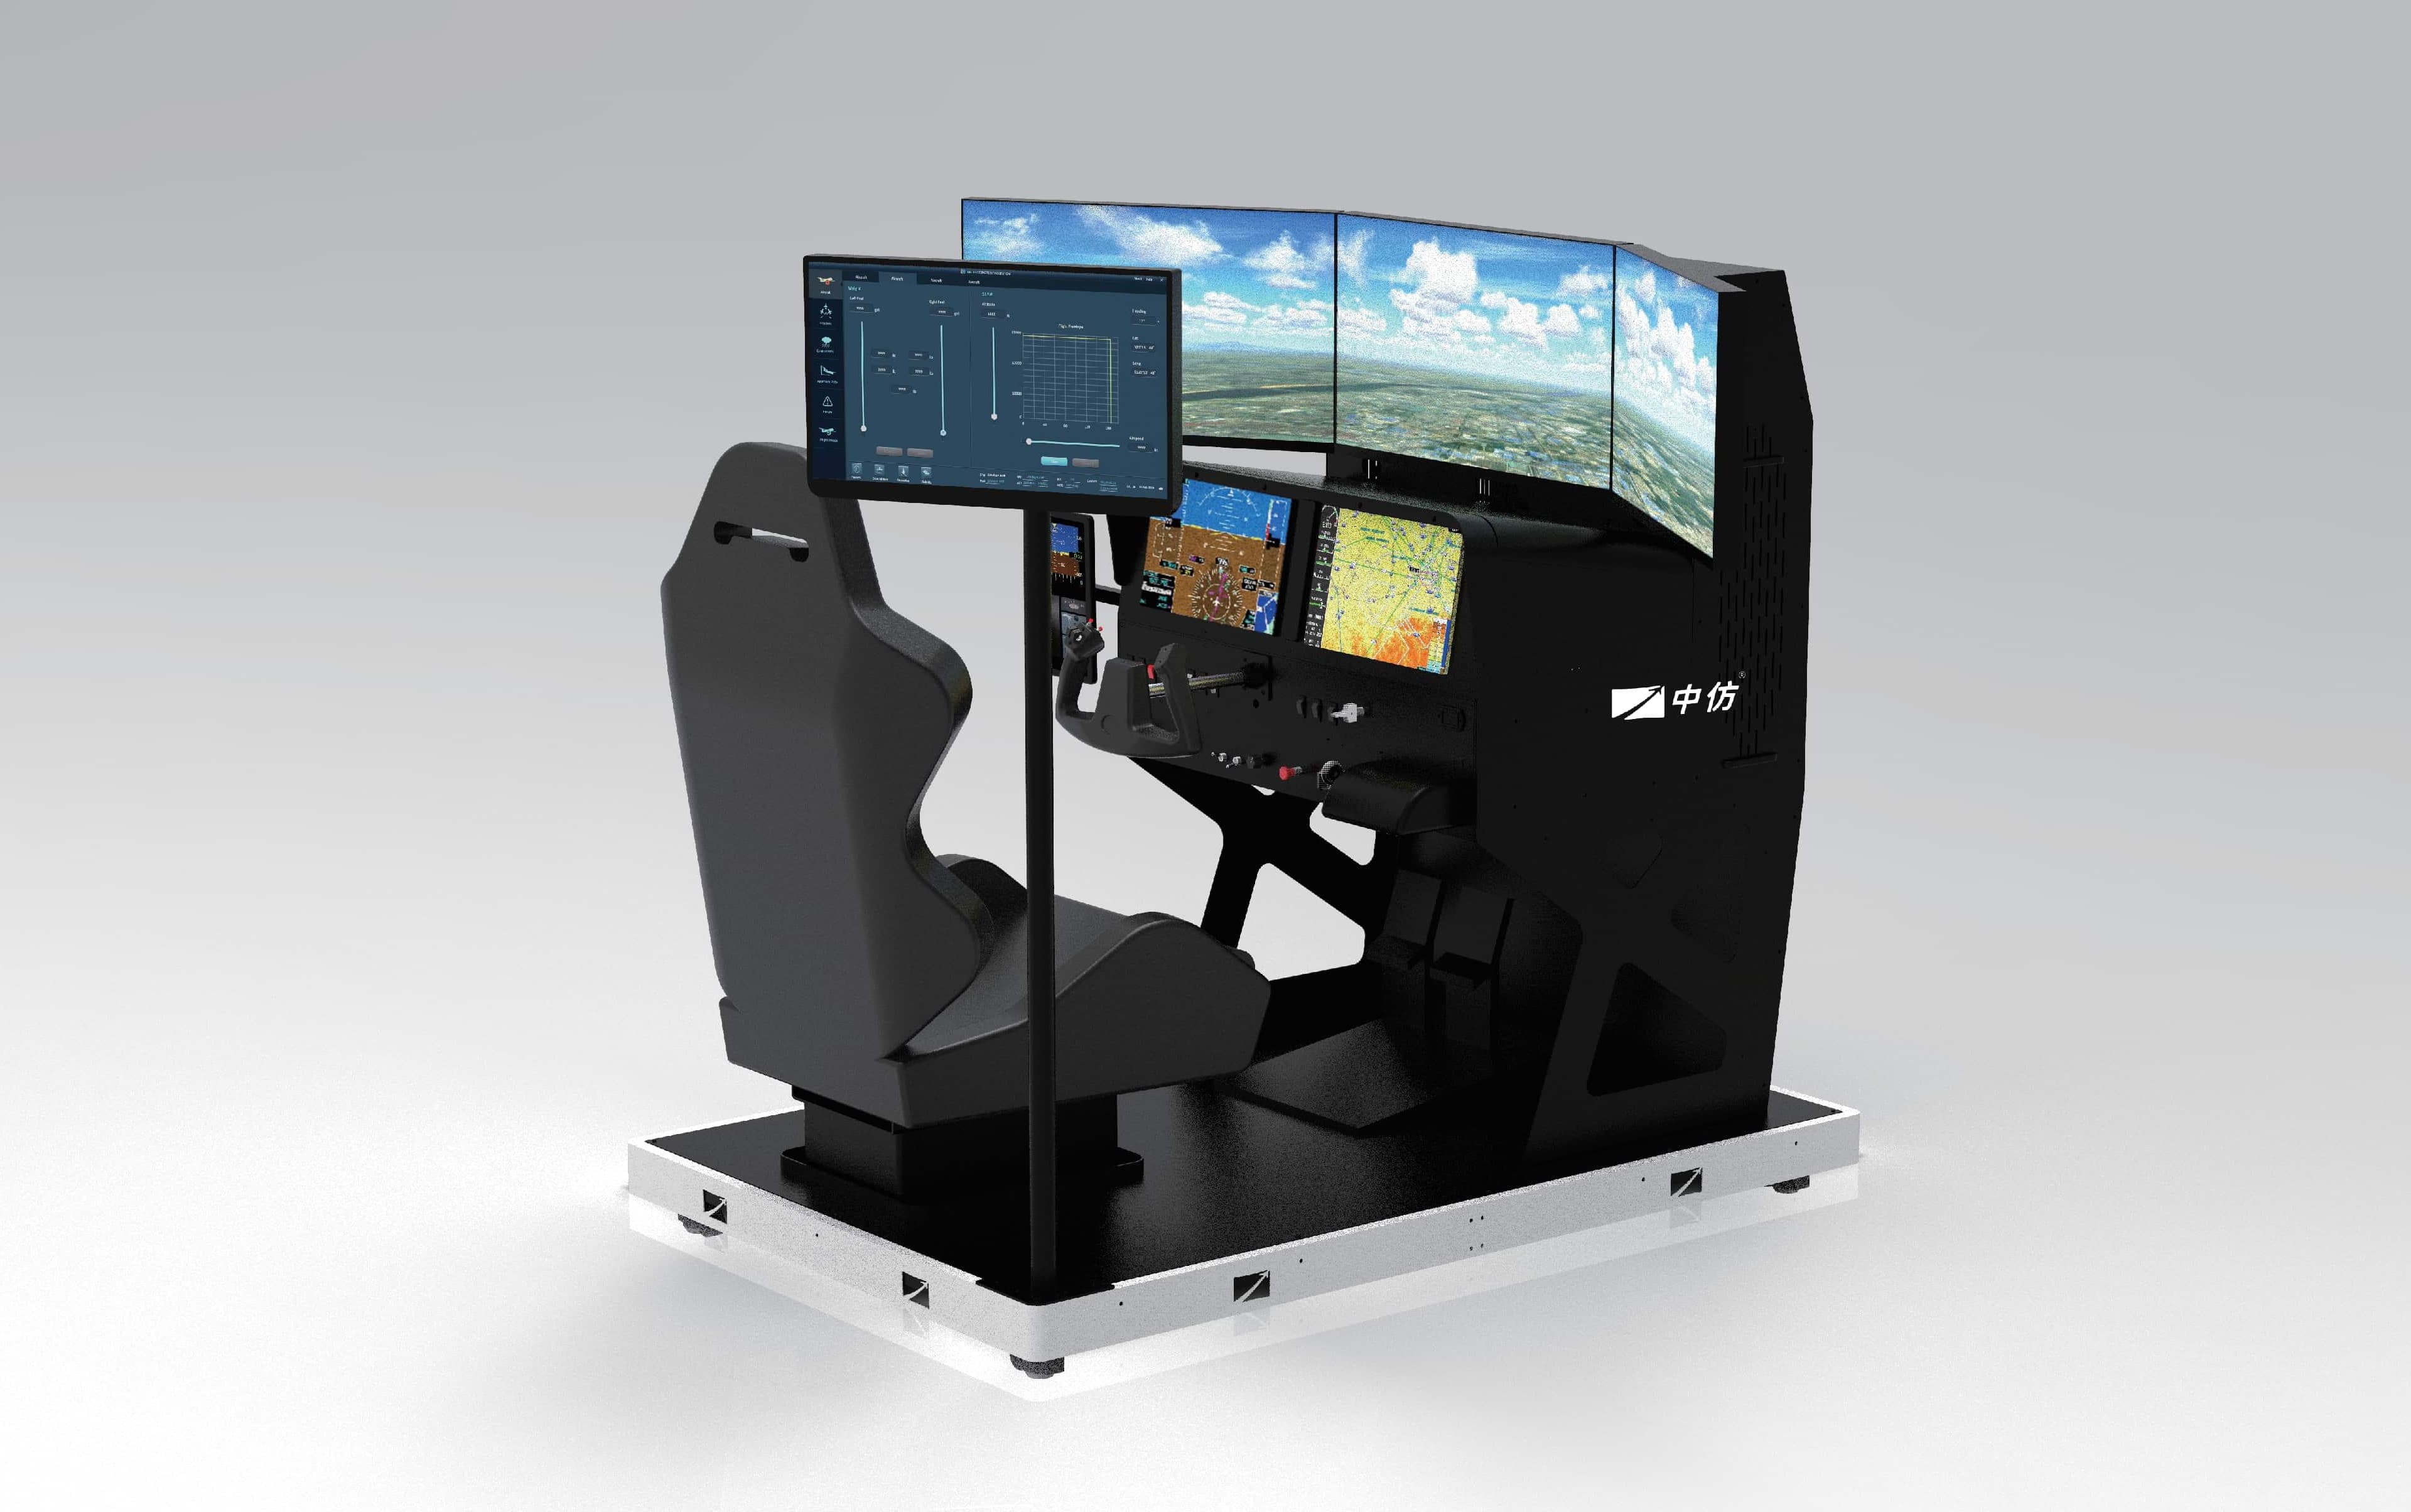 CnTech CNFSimulator.AATD Advanced Aviation Training Device